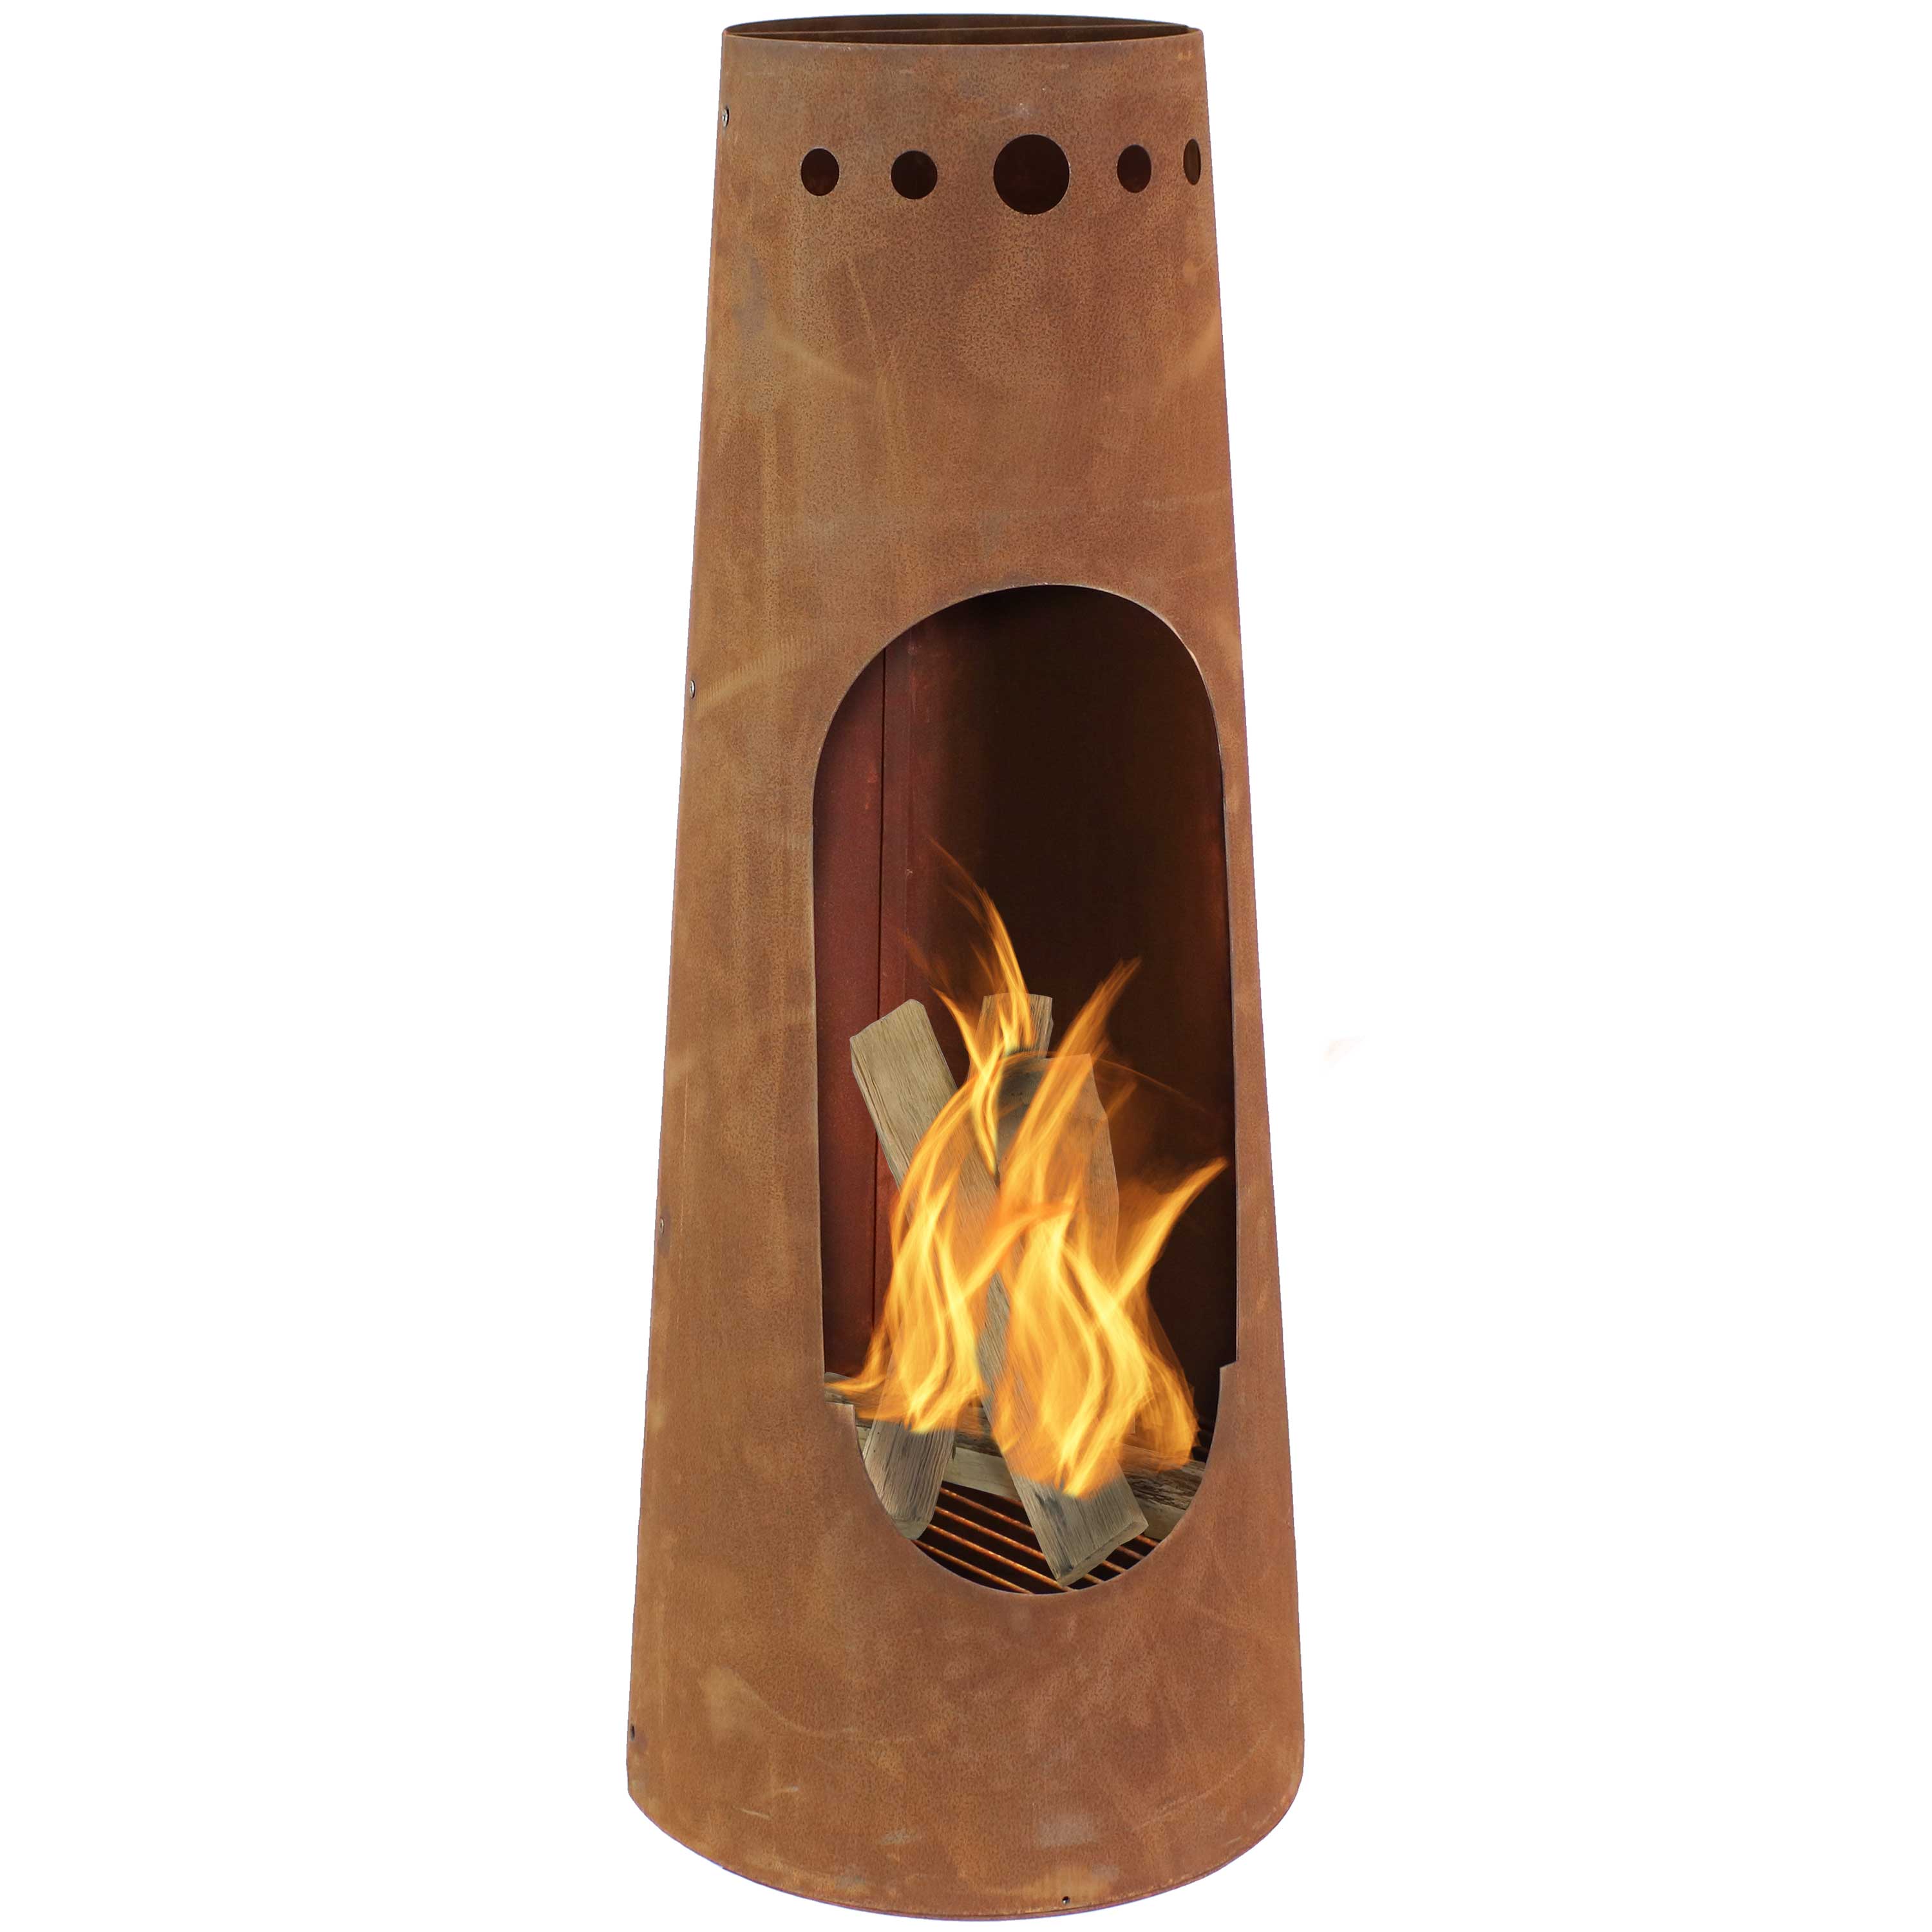 Sunnydaze Santa Fe Steel Wood-Burning Chiminea with Rustic Finish - 50-Inch